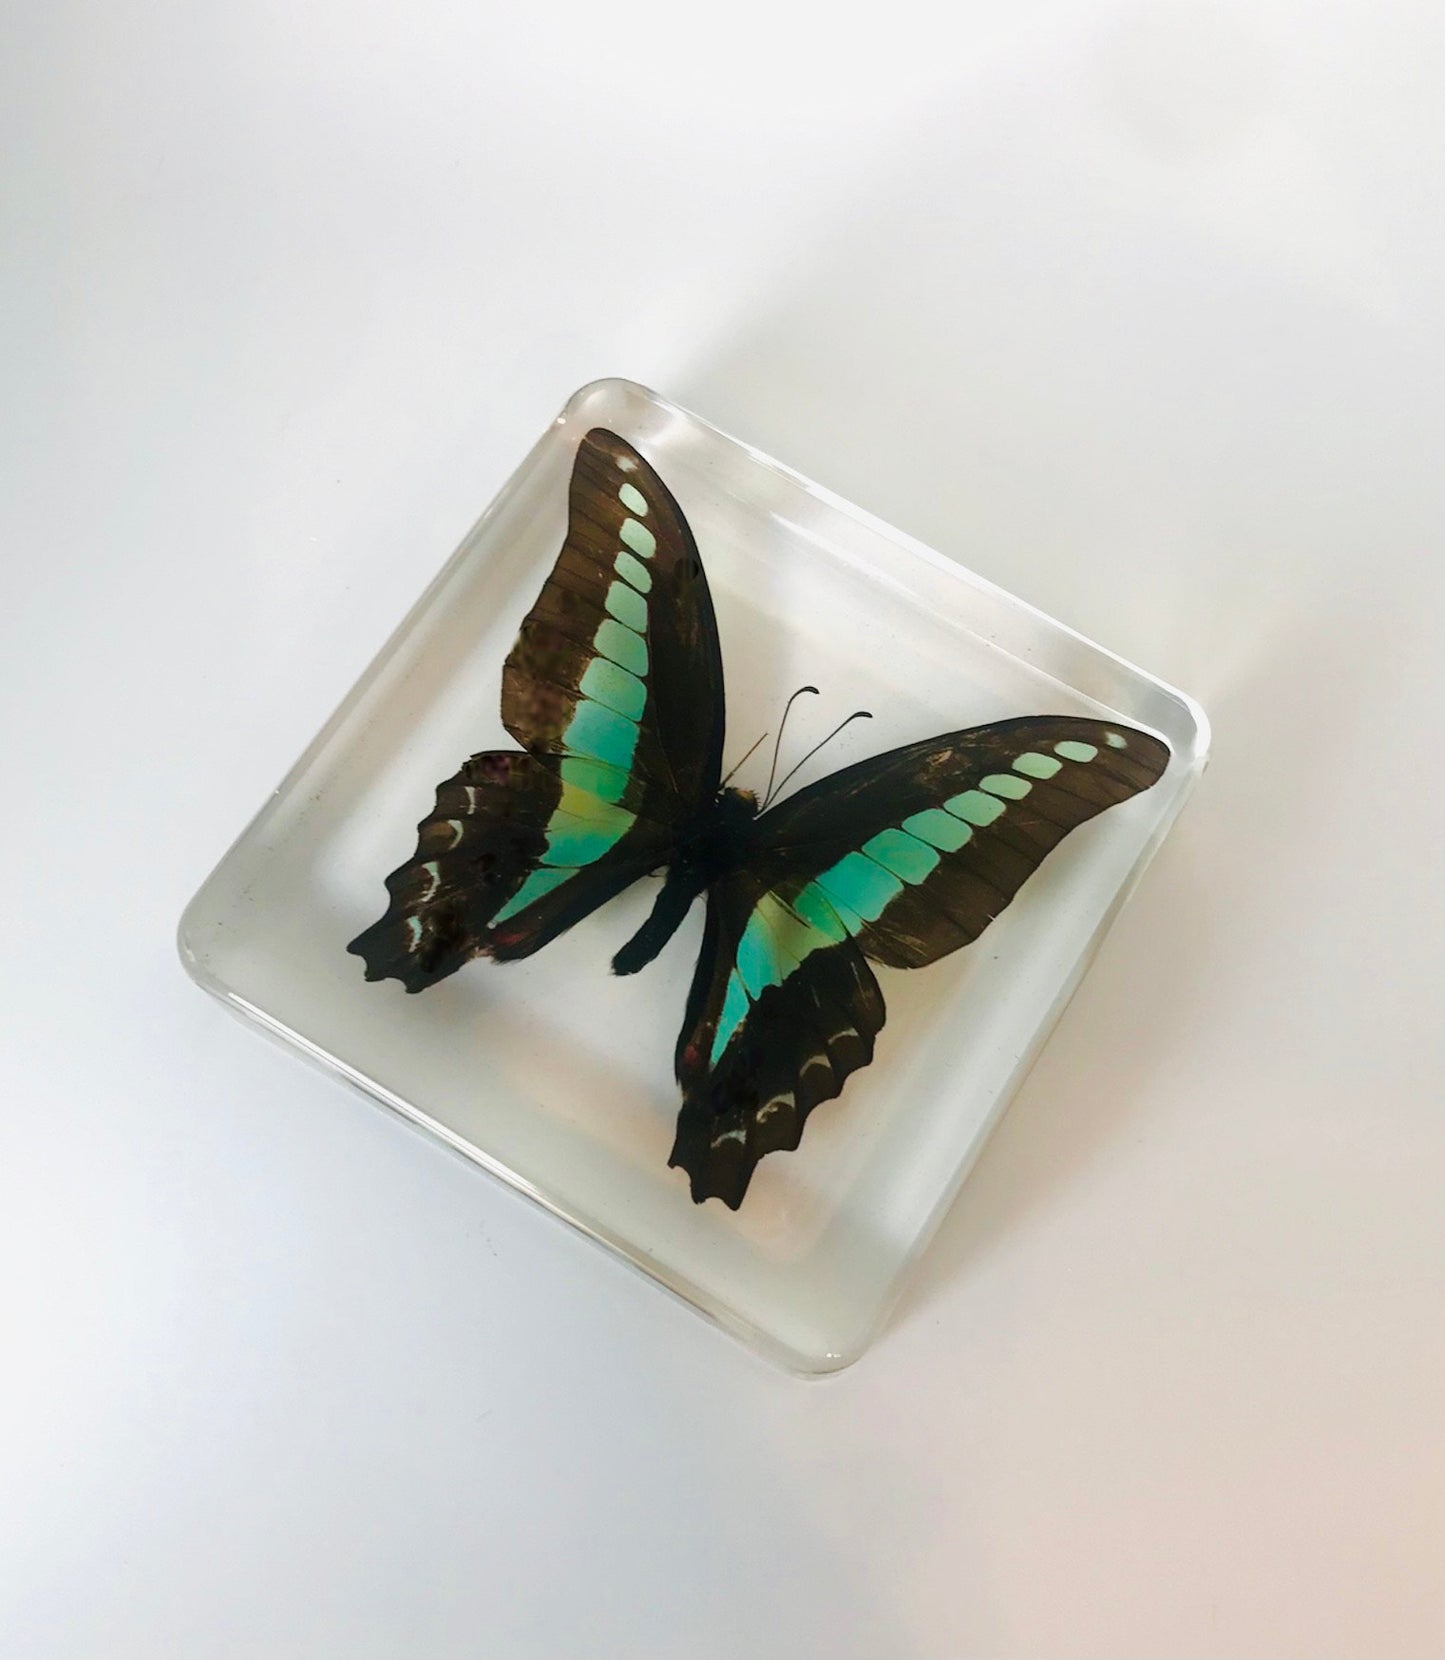 Bluebottle Butterfly Resin Paperweight